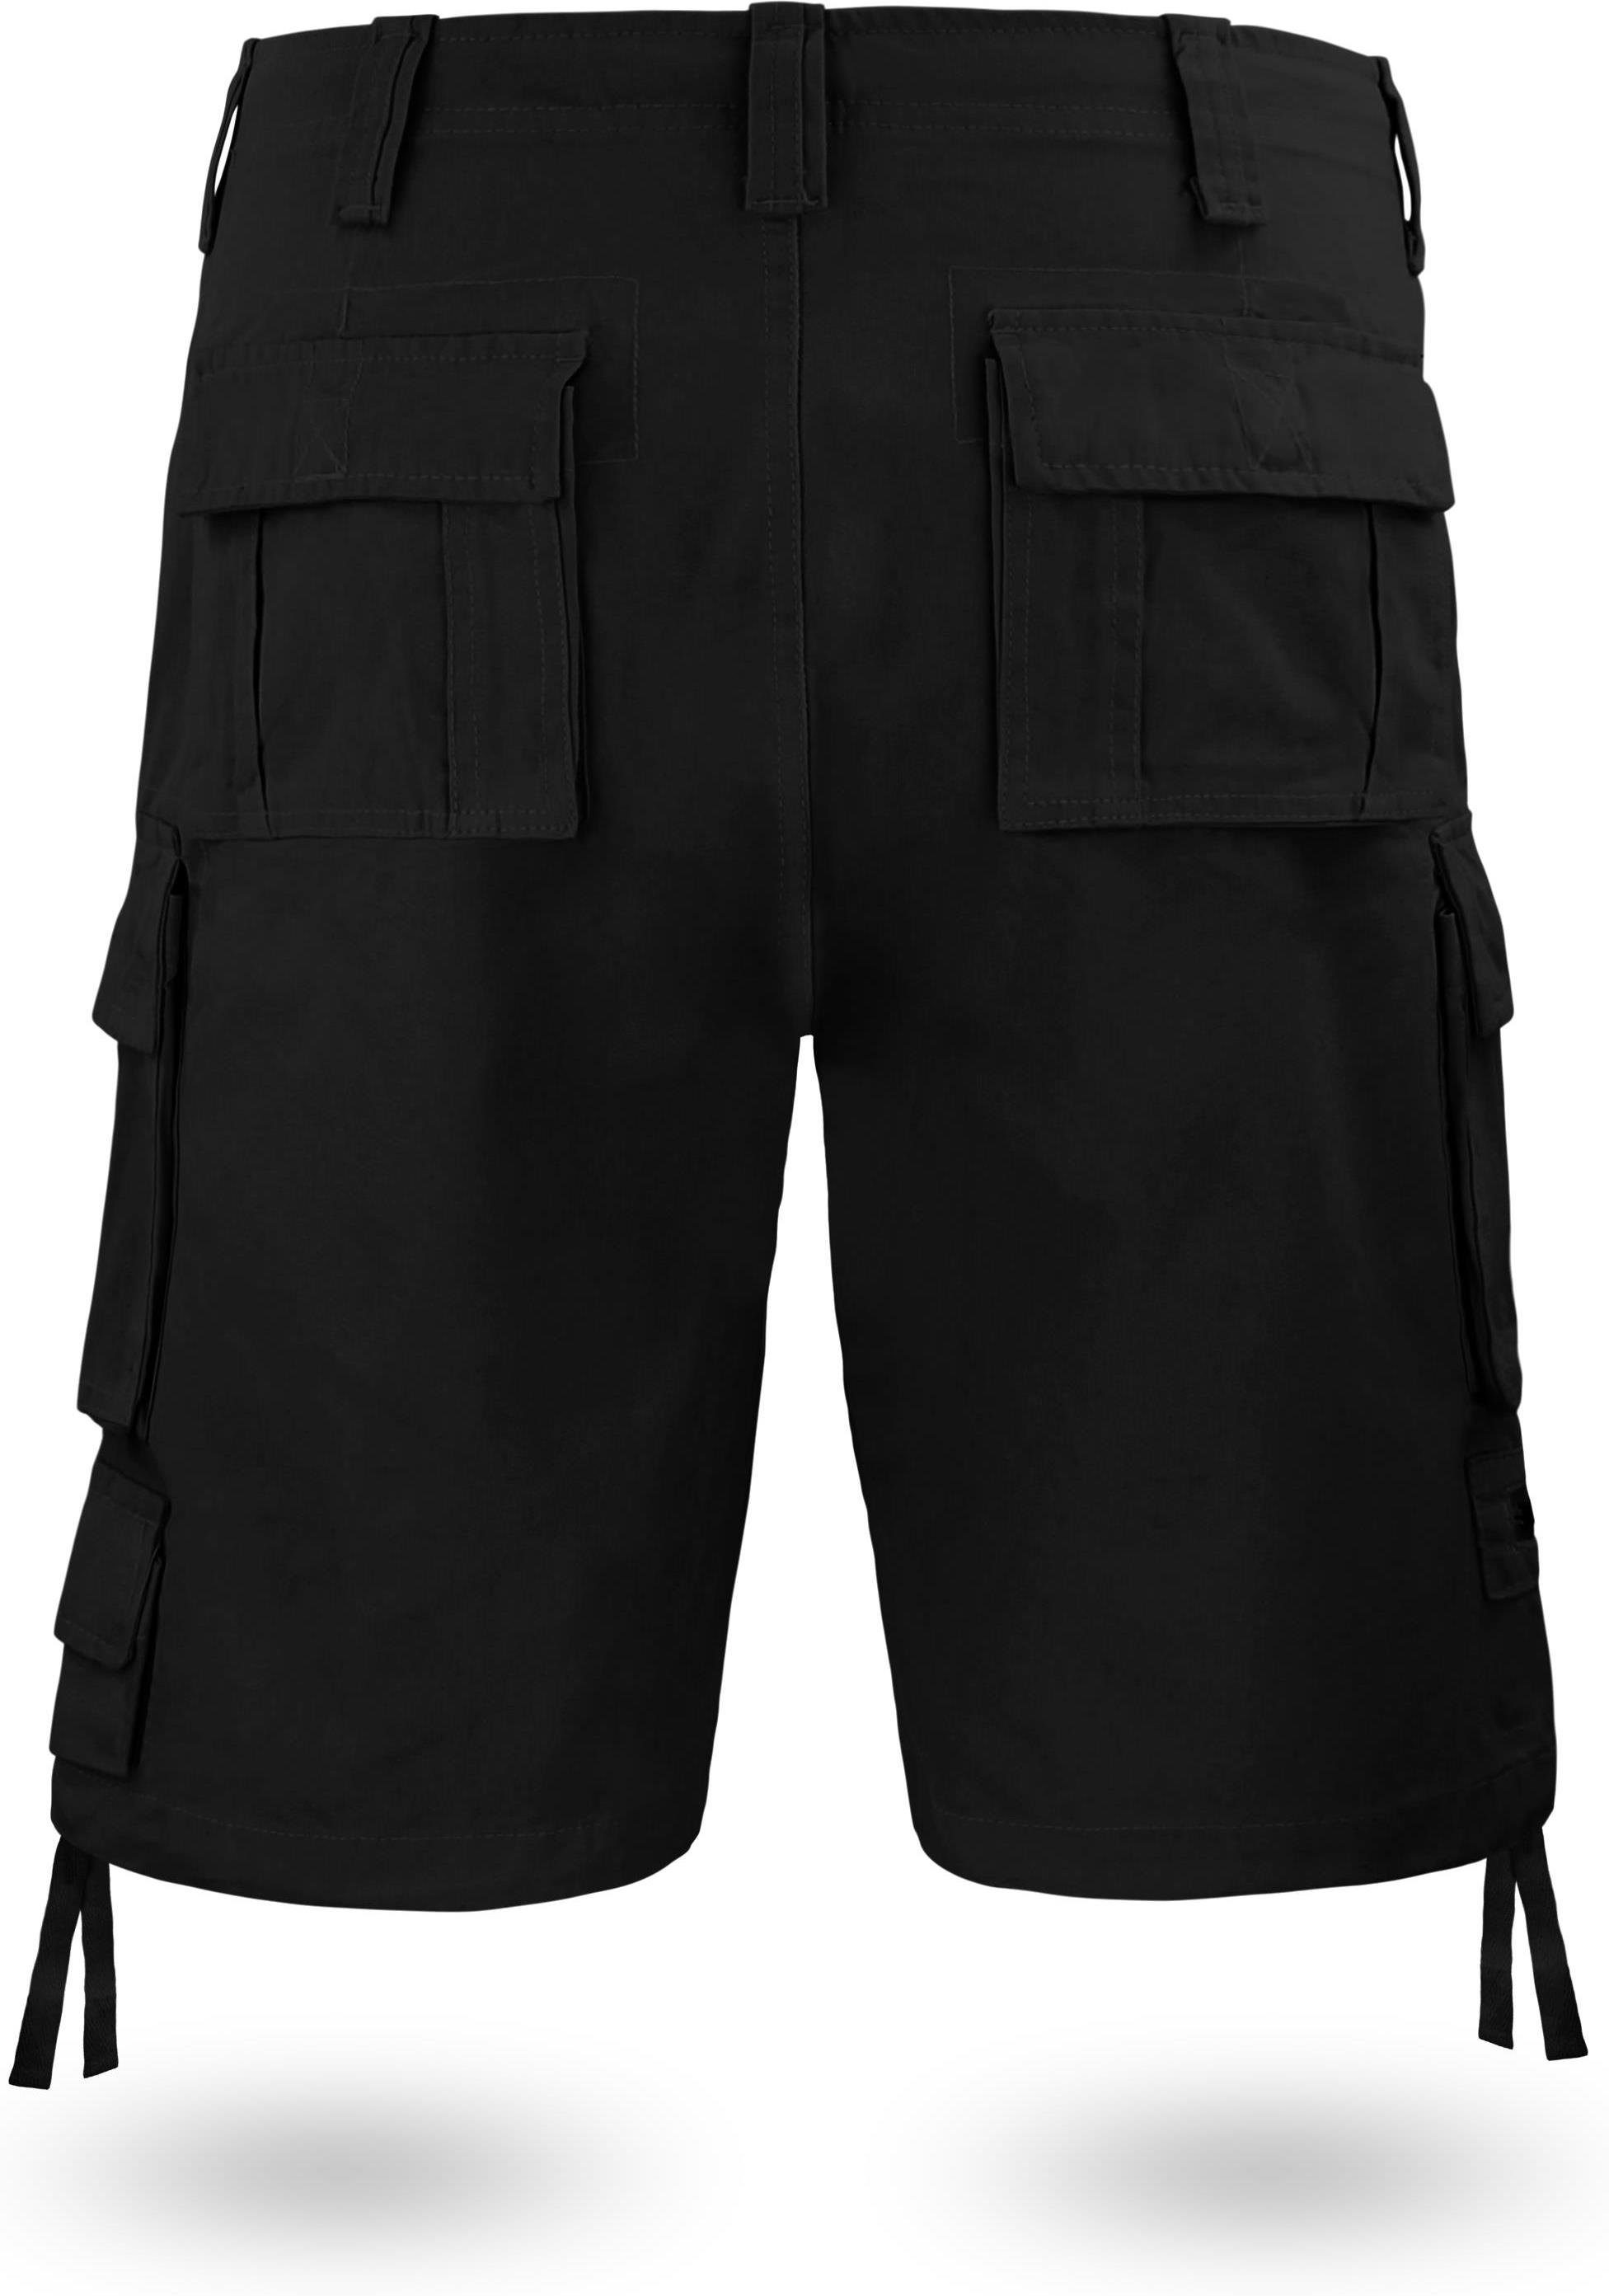 aus Schwarz Atacama kurze Shorts 100% Bio-Baumwolle Bermudas Vintage Cargoshorts Sommershorts normani Herren Shorts